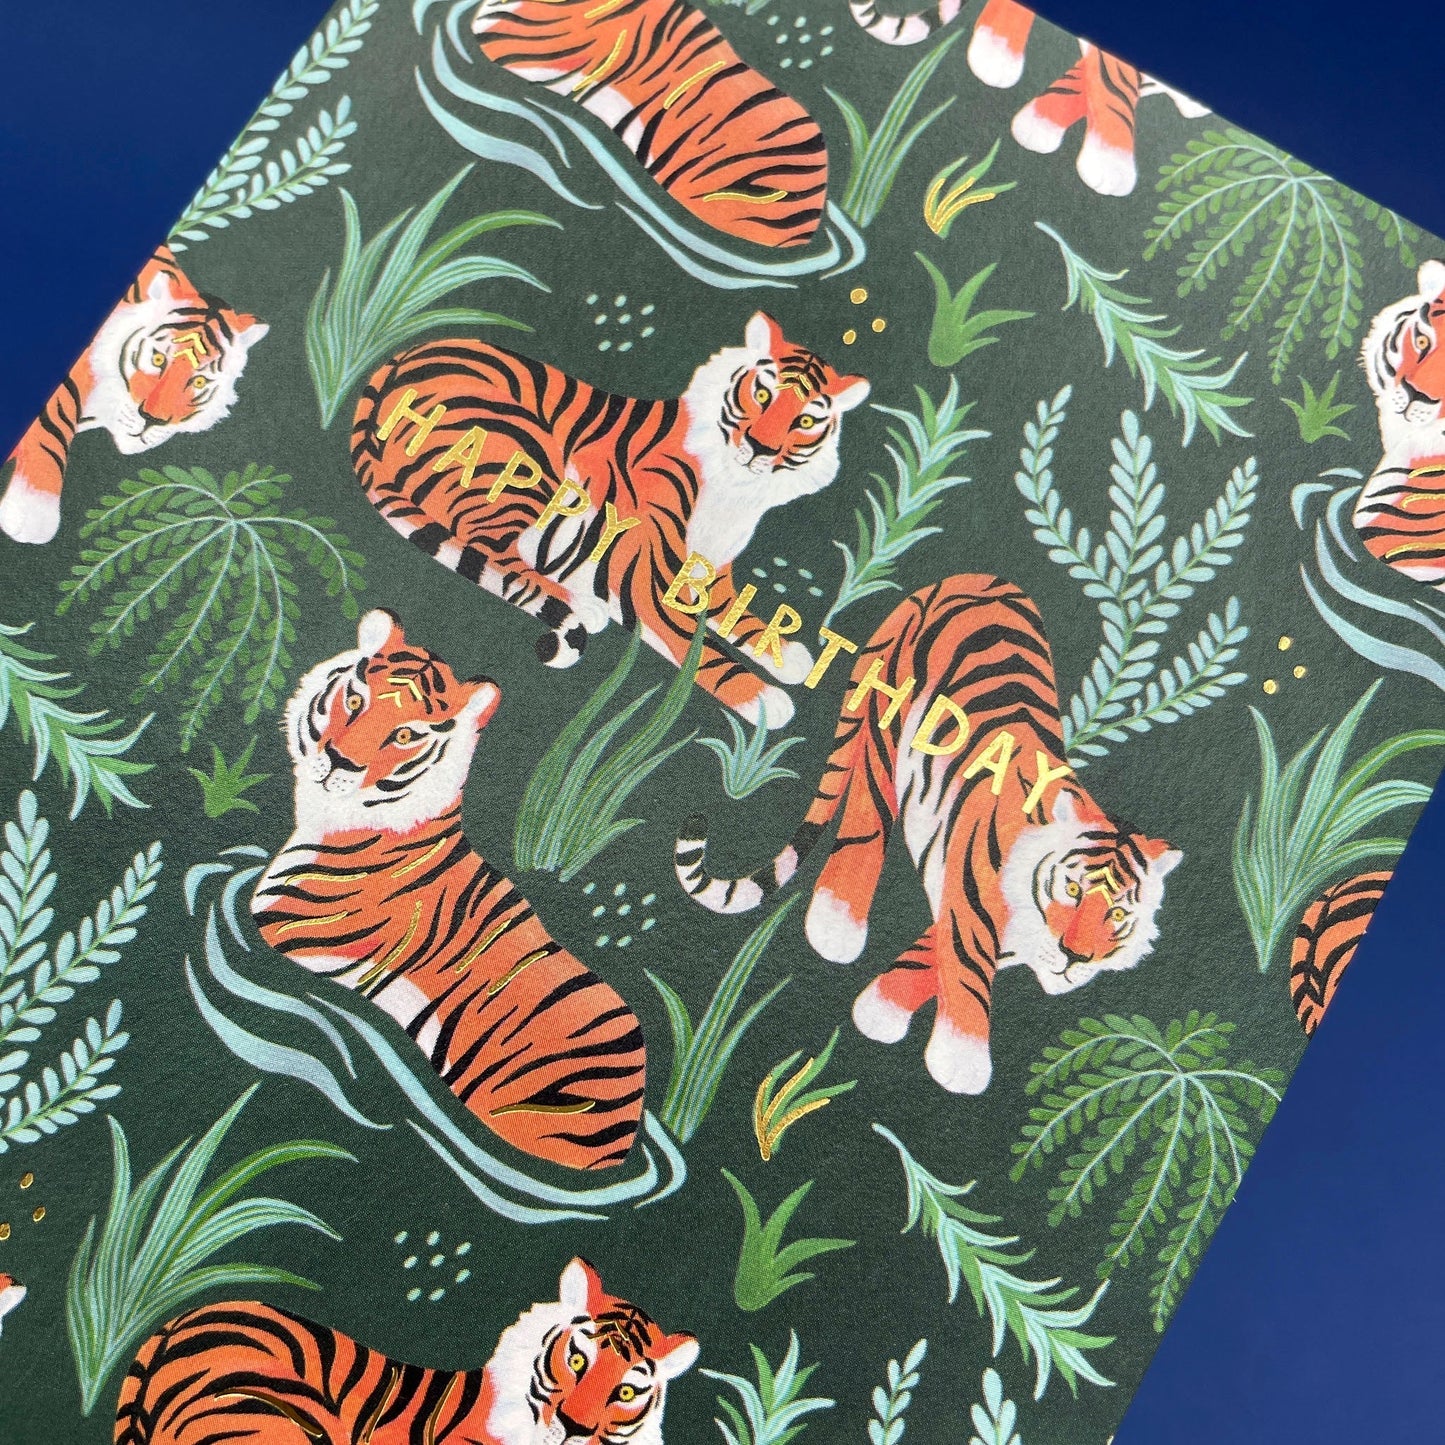 Tiger pattern card